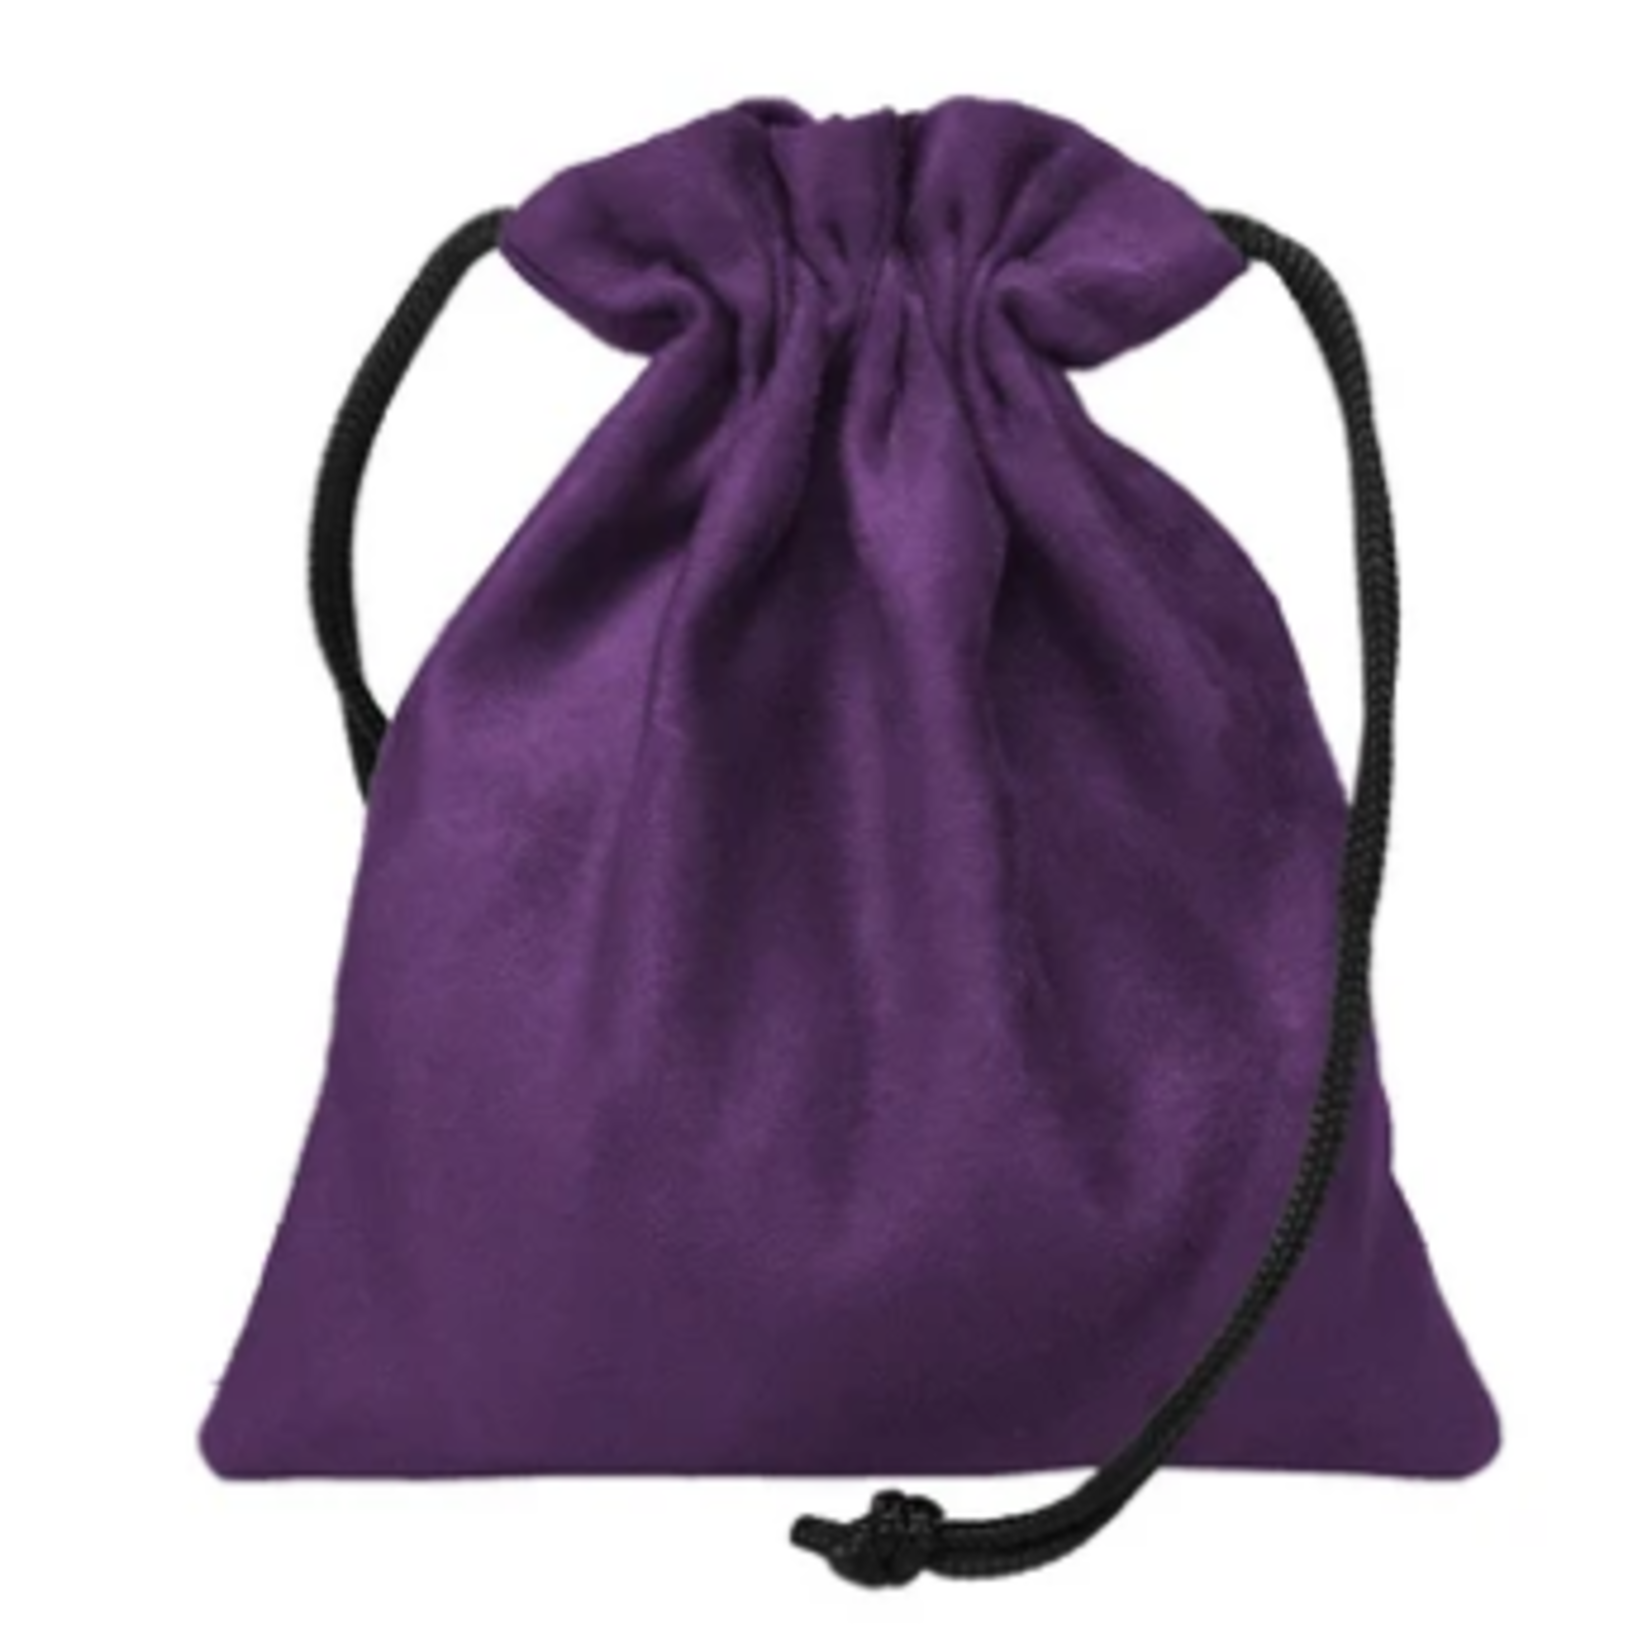 Dice Bag: Classic Dice Pouch - Purple